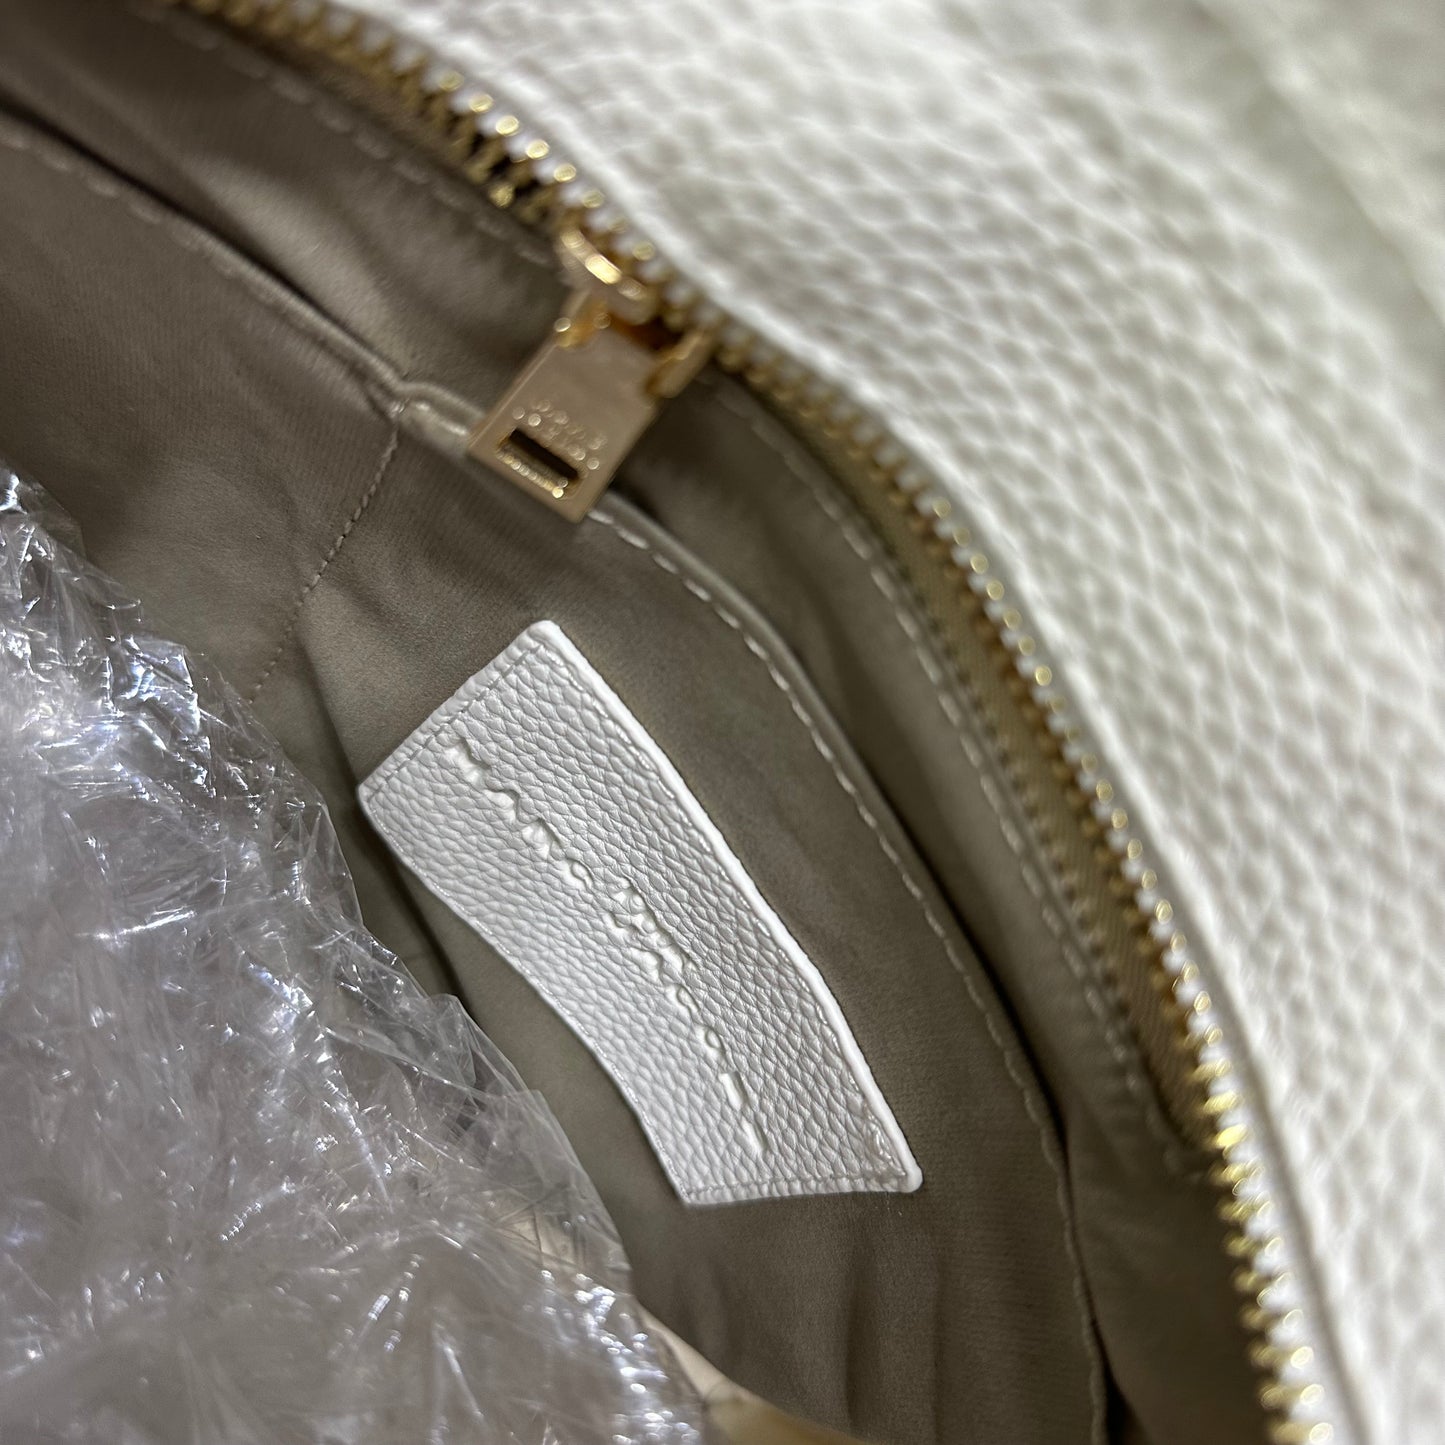 Marc Jacobs Tote Bag White Medium bags